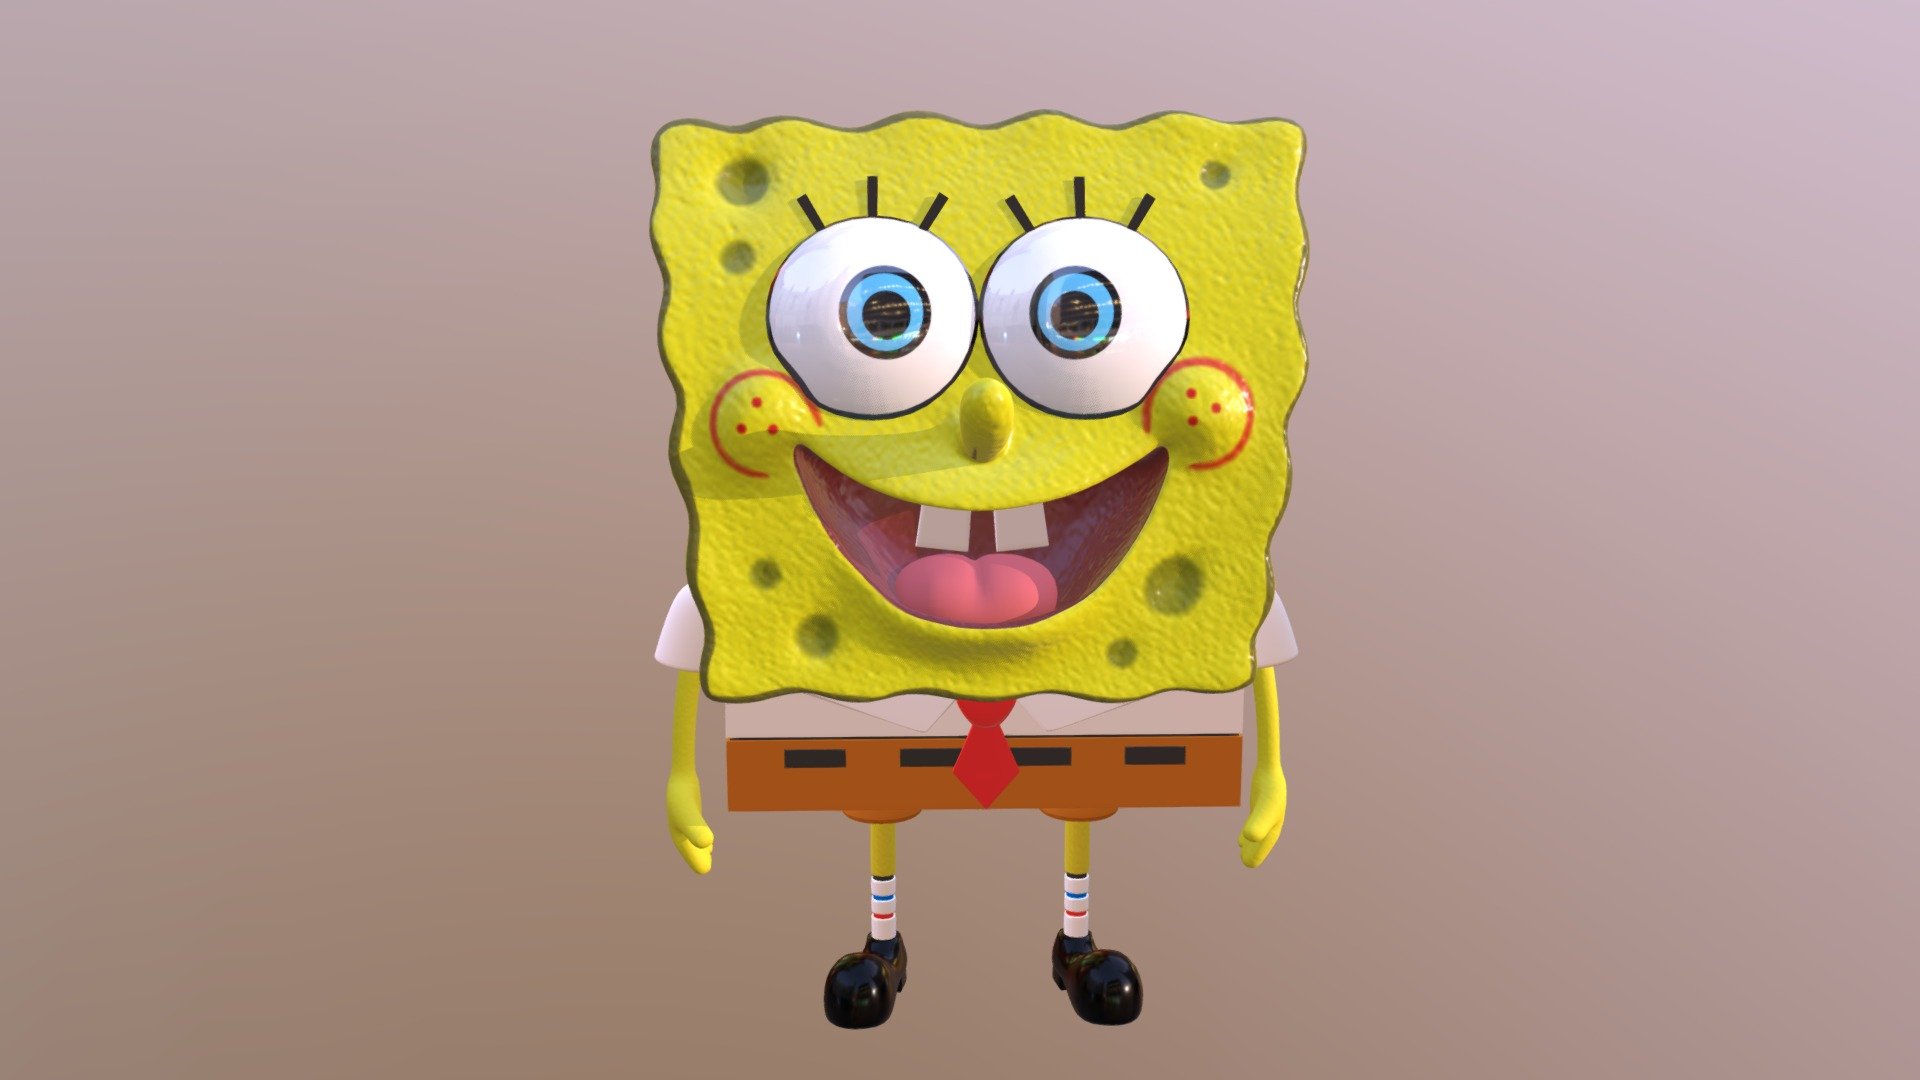 3d model of the character SpongeBob SquarePants from the childrens cartoon SpongeBob 3d model